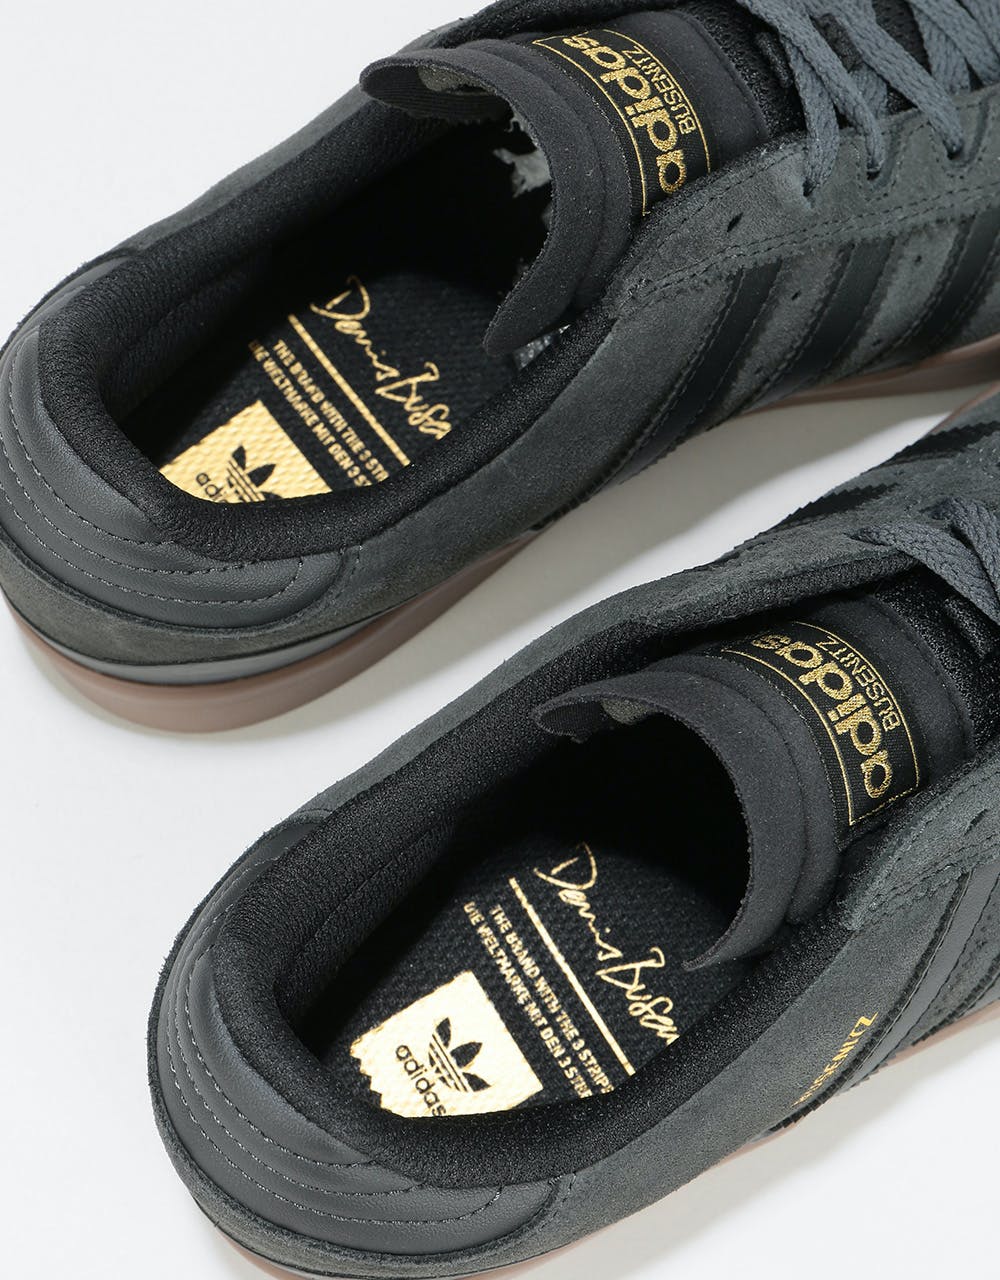 adidas Busenitz Vulc Skate Shoes - Solid Grey/Core Black/Gum – Route One